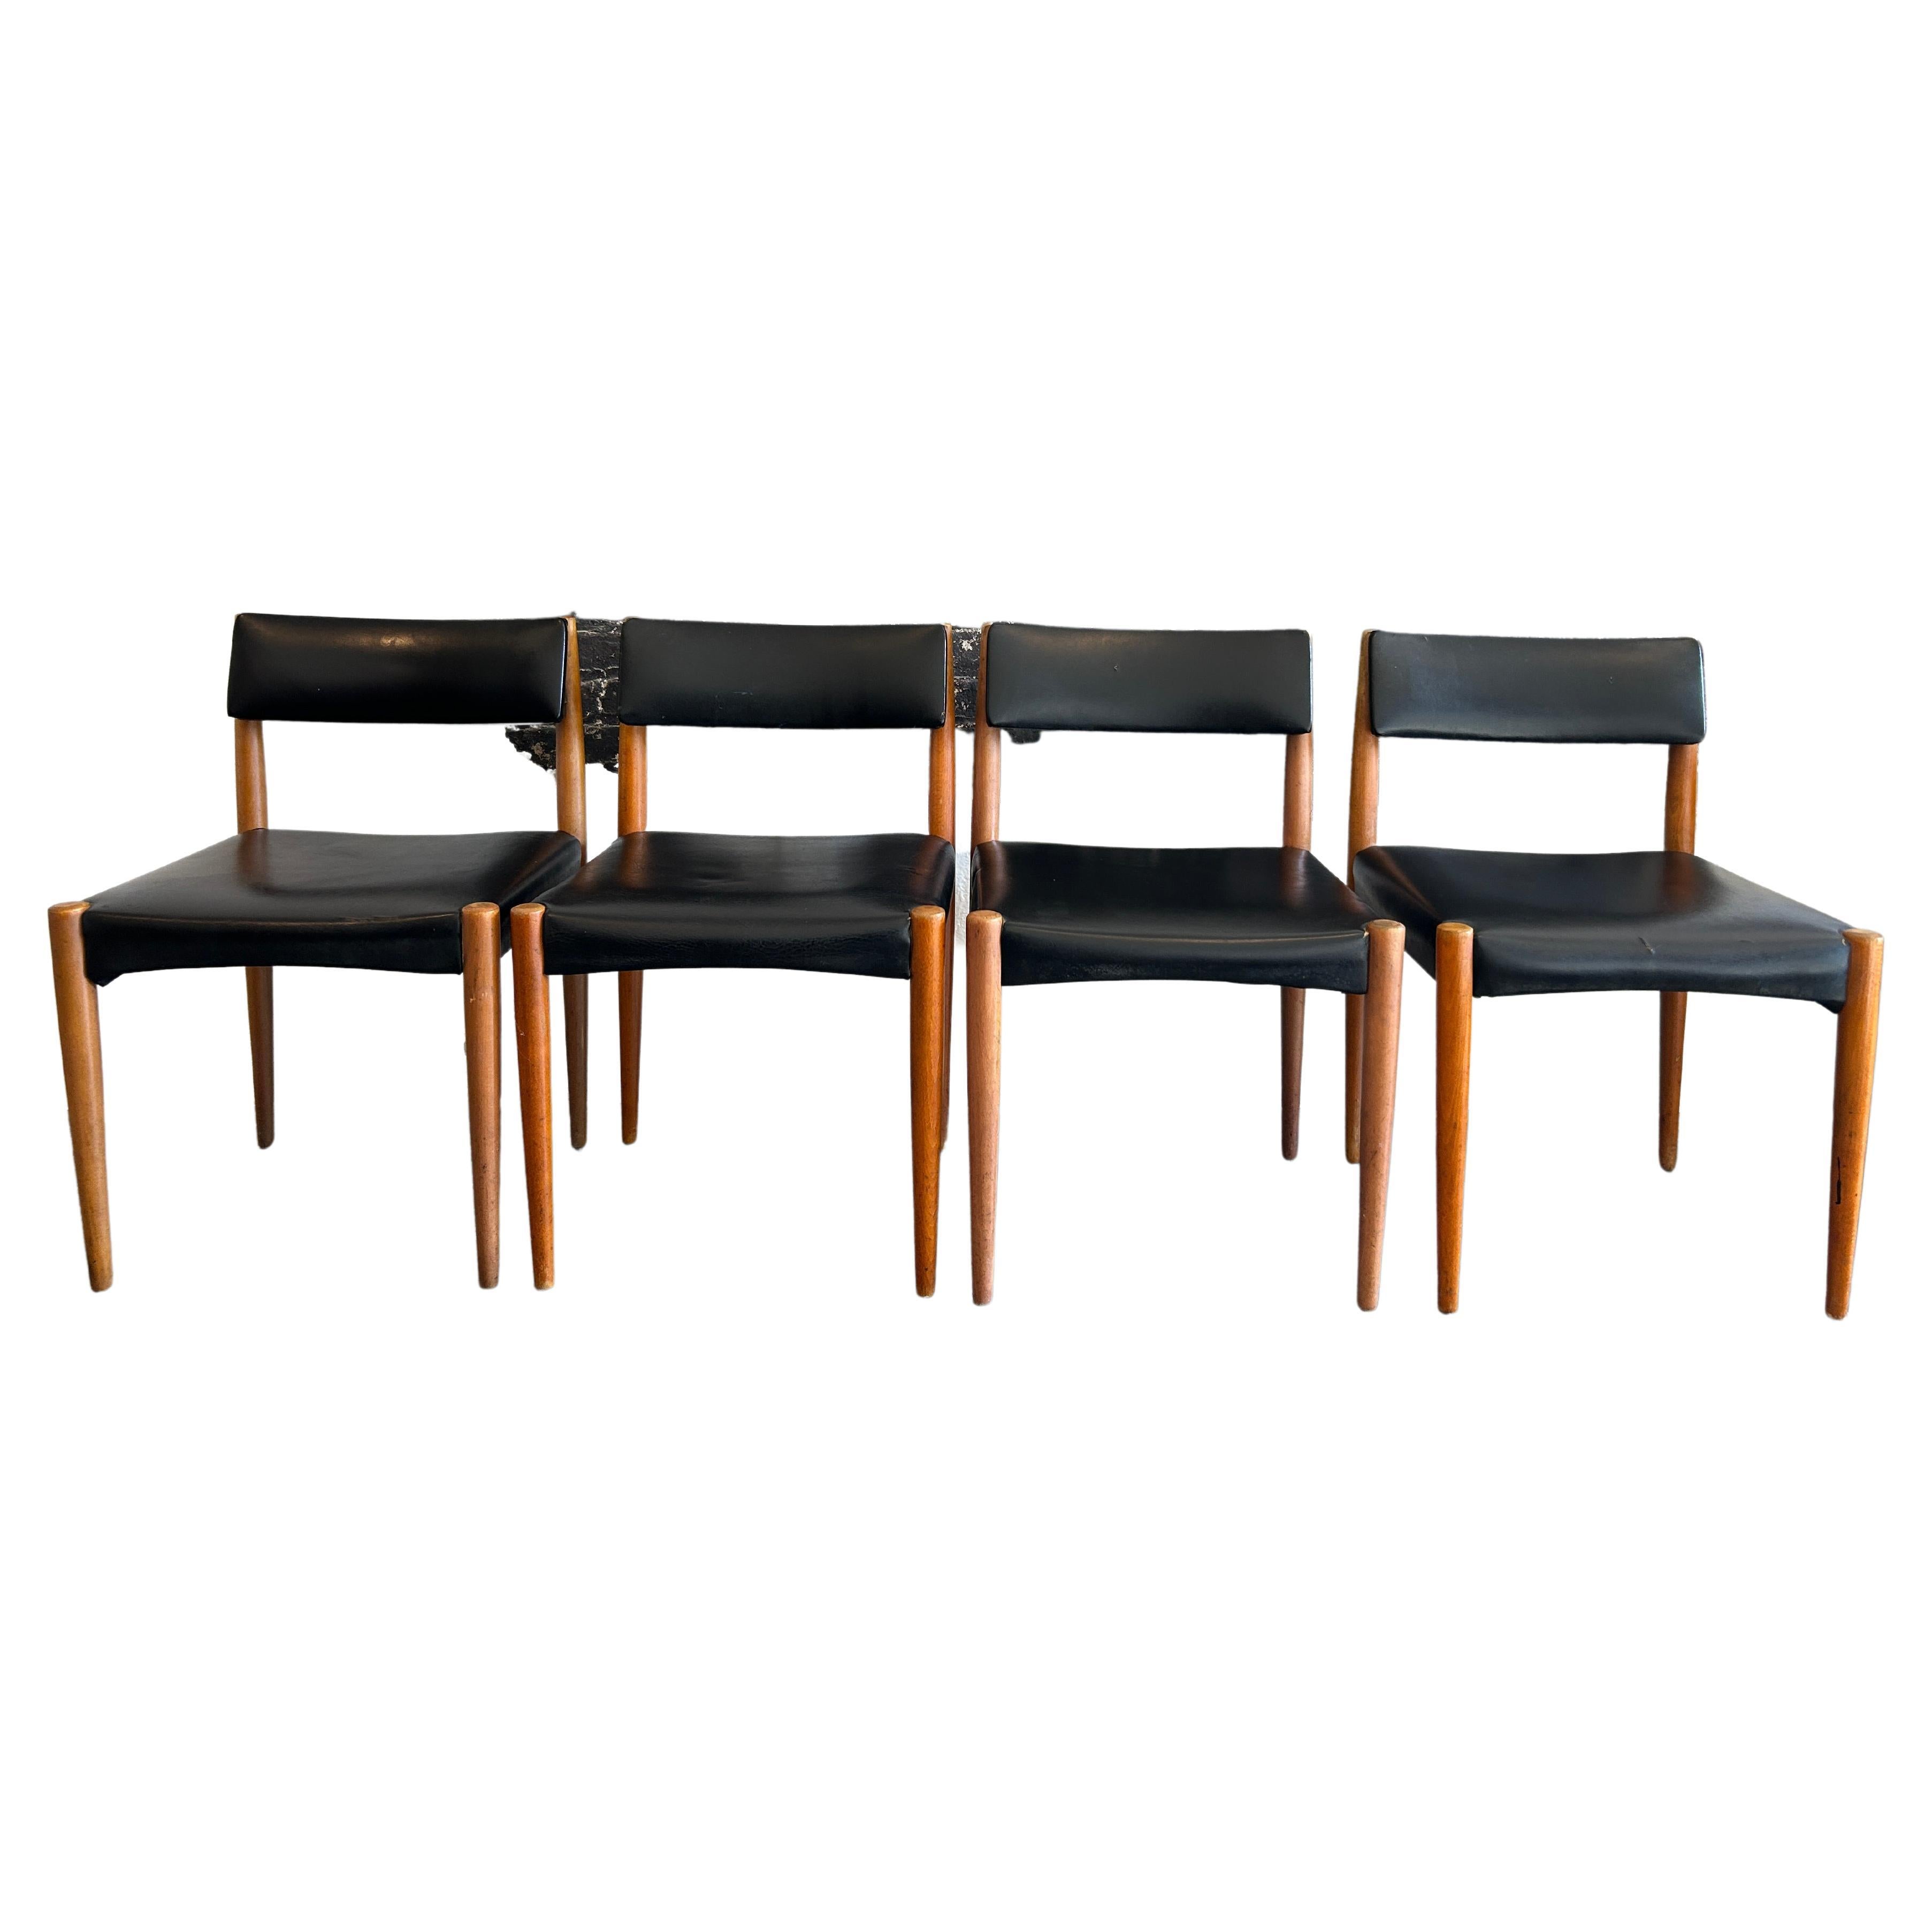 4 Mid Century Danish Modern Dining Chairs Black Vinyl Birch Wood